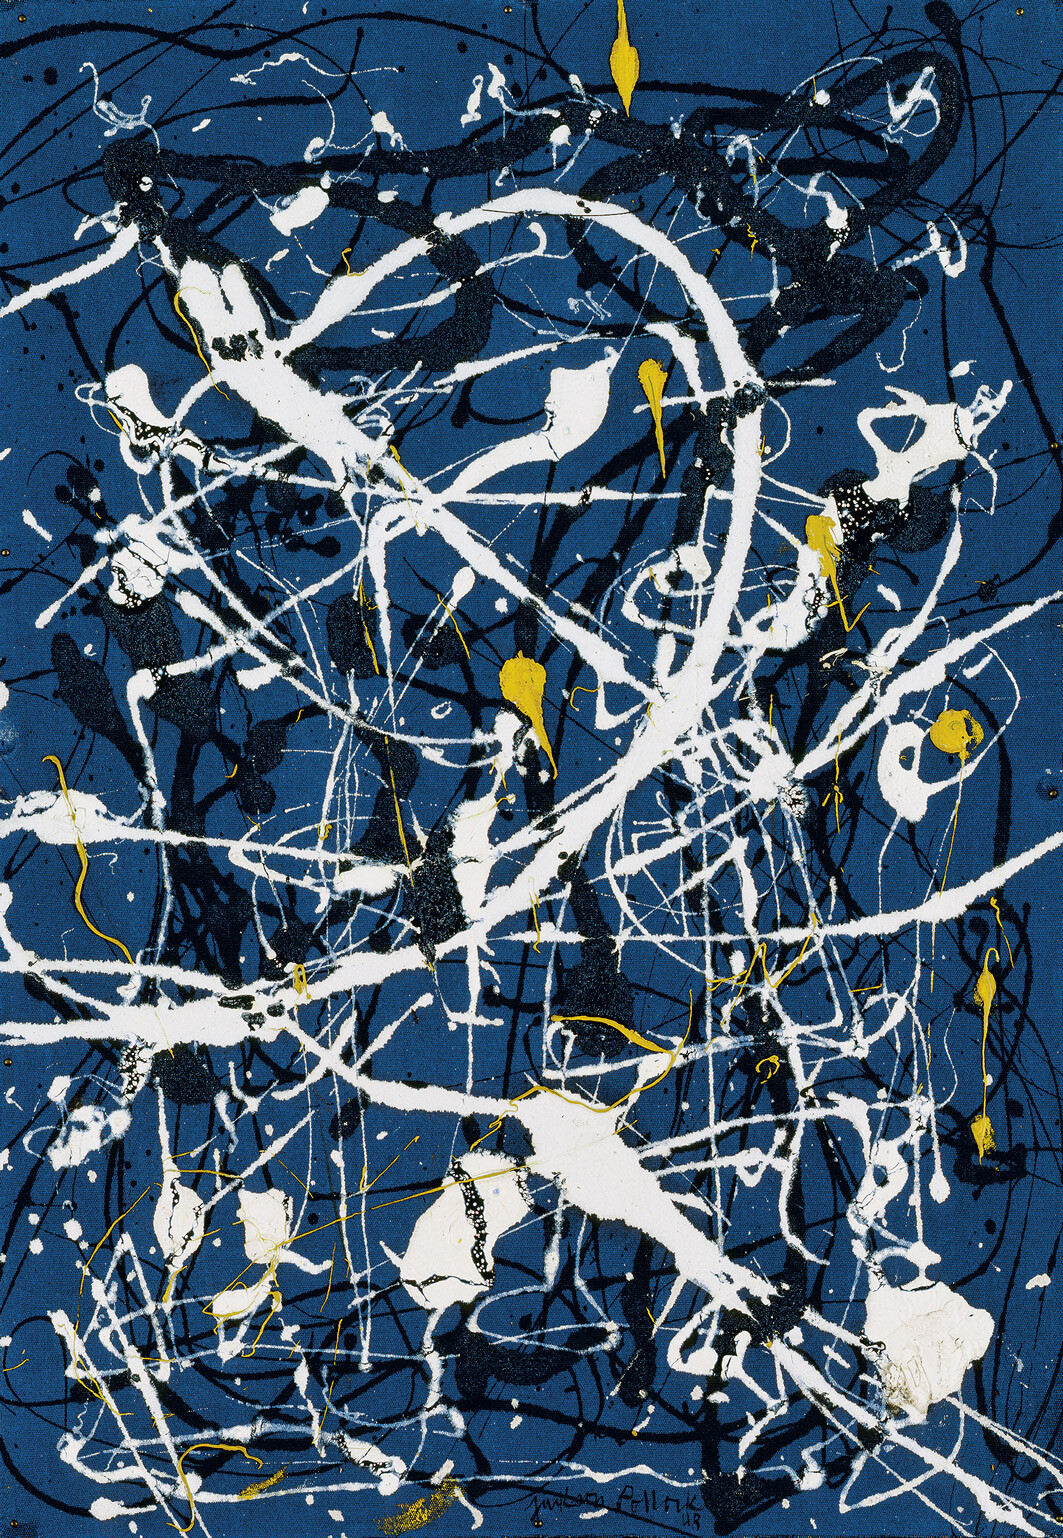 Screw it, I'll just become Jackson Pollock